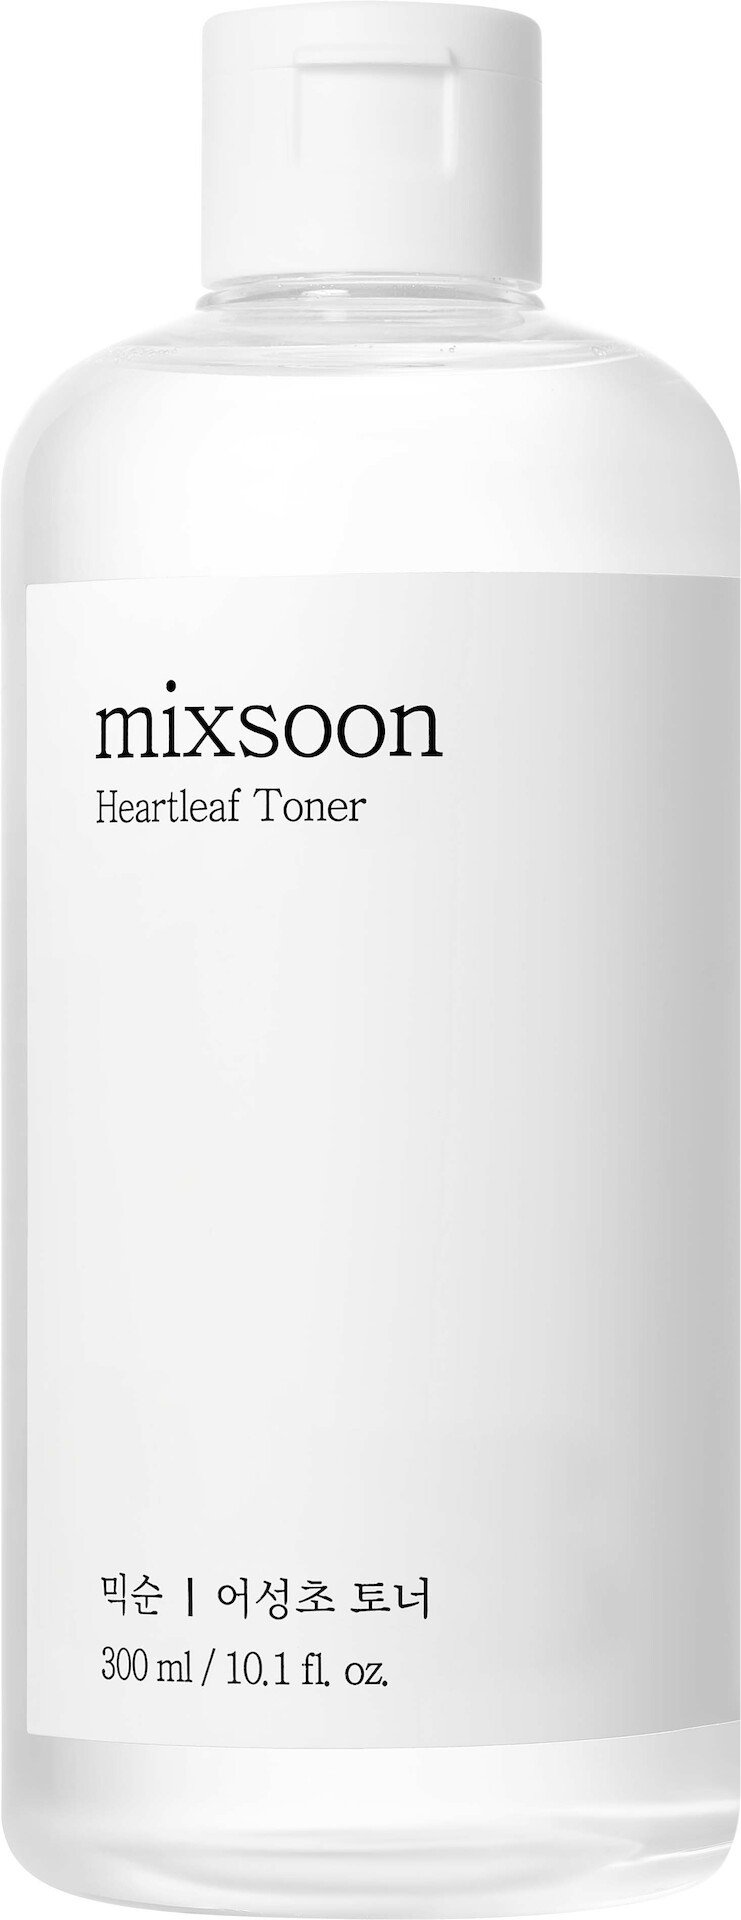 Mixsoon Heartleaf Toner 300ml